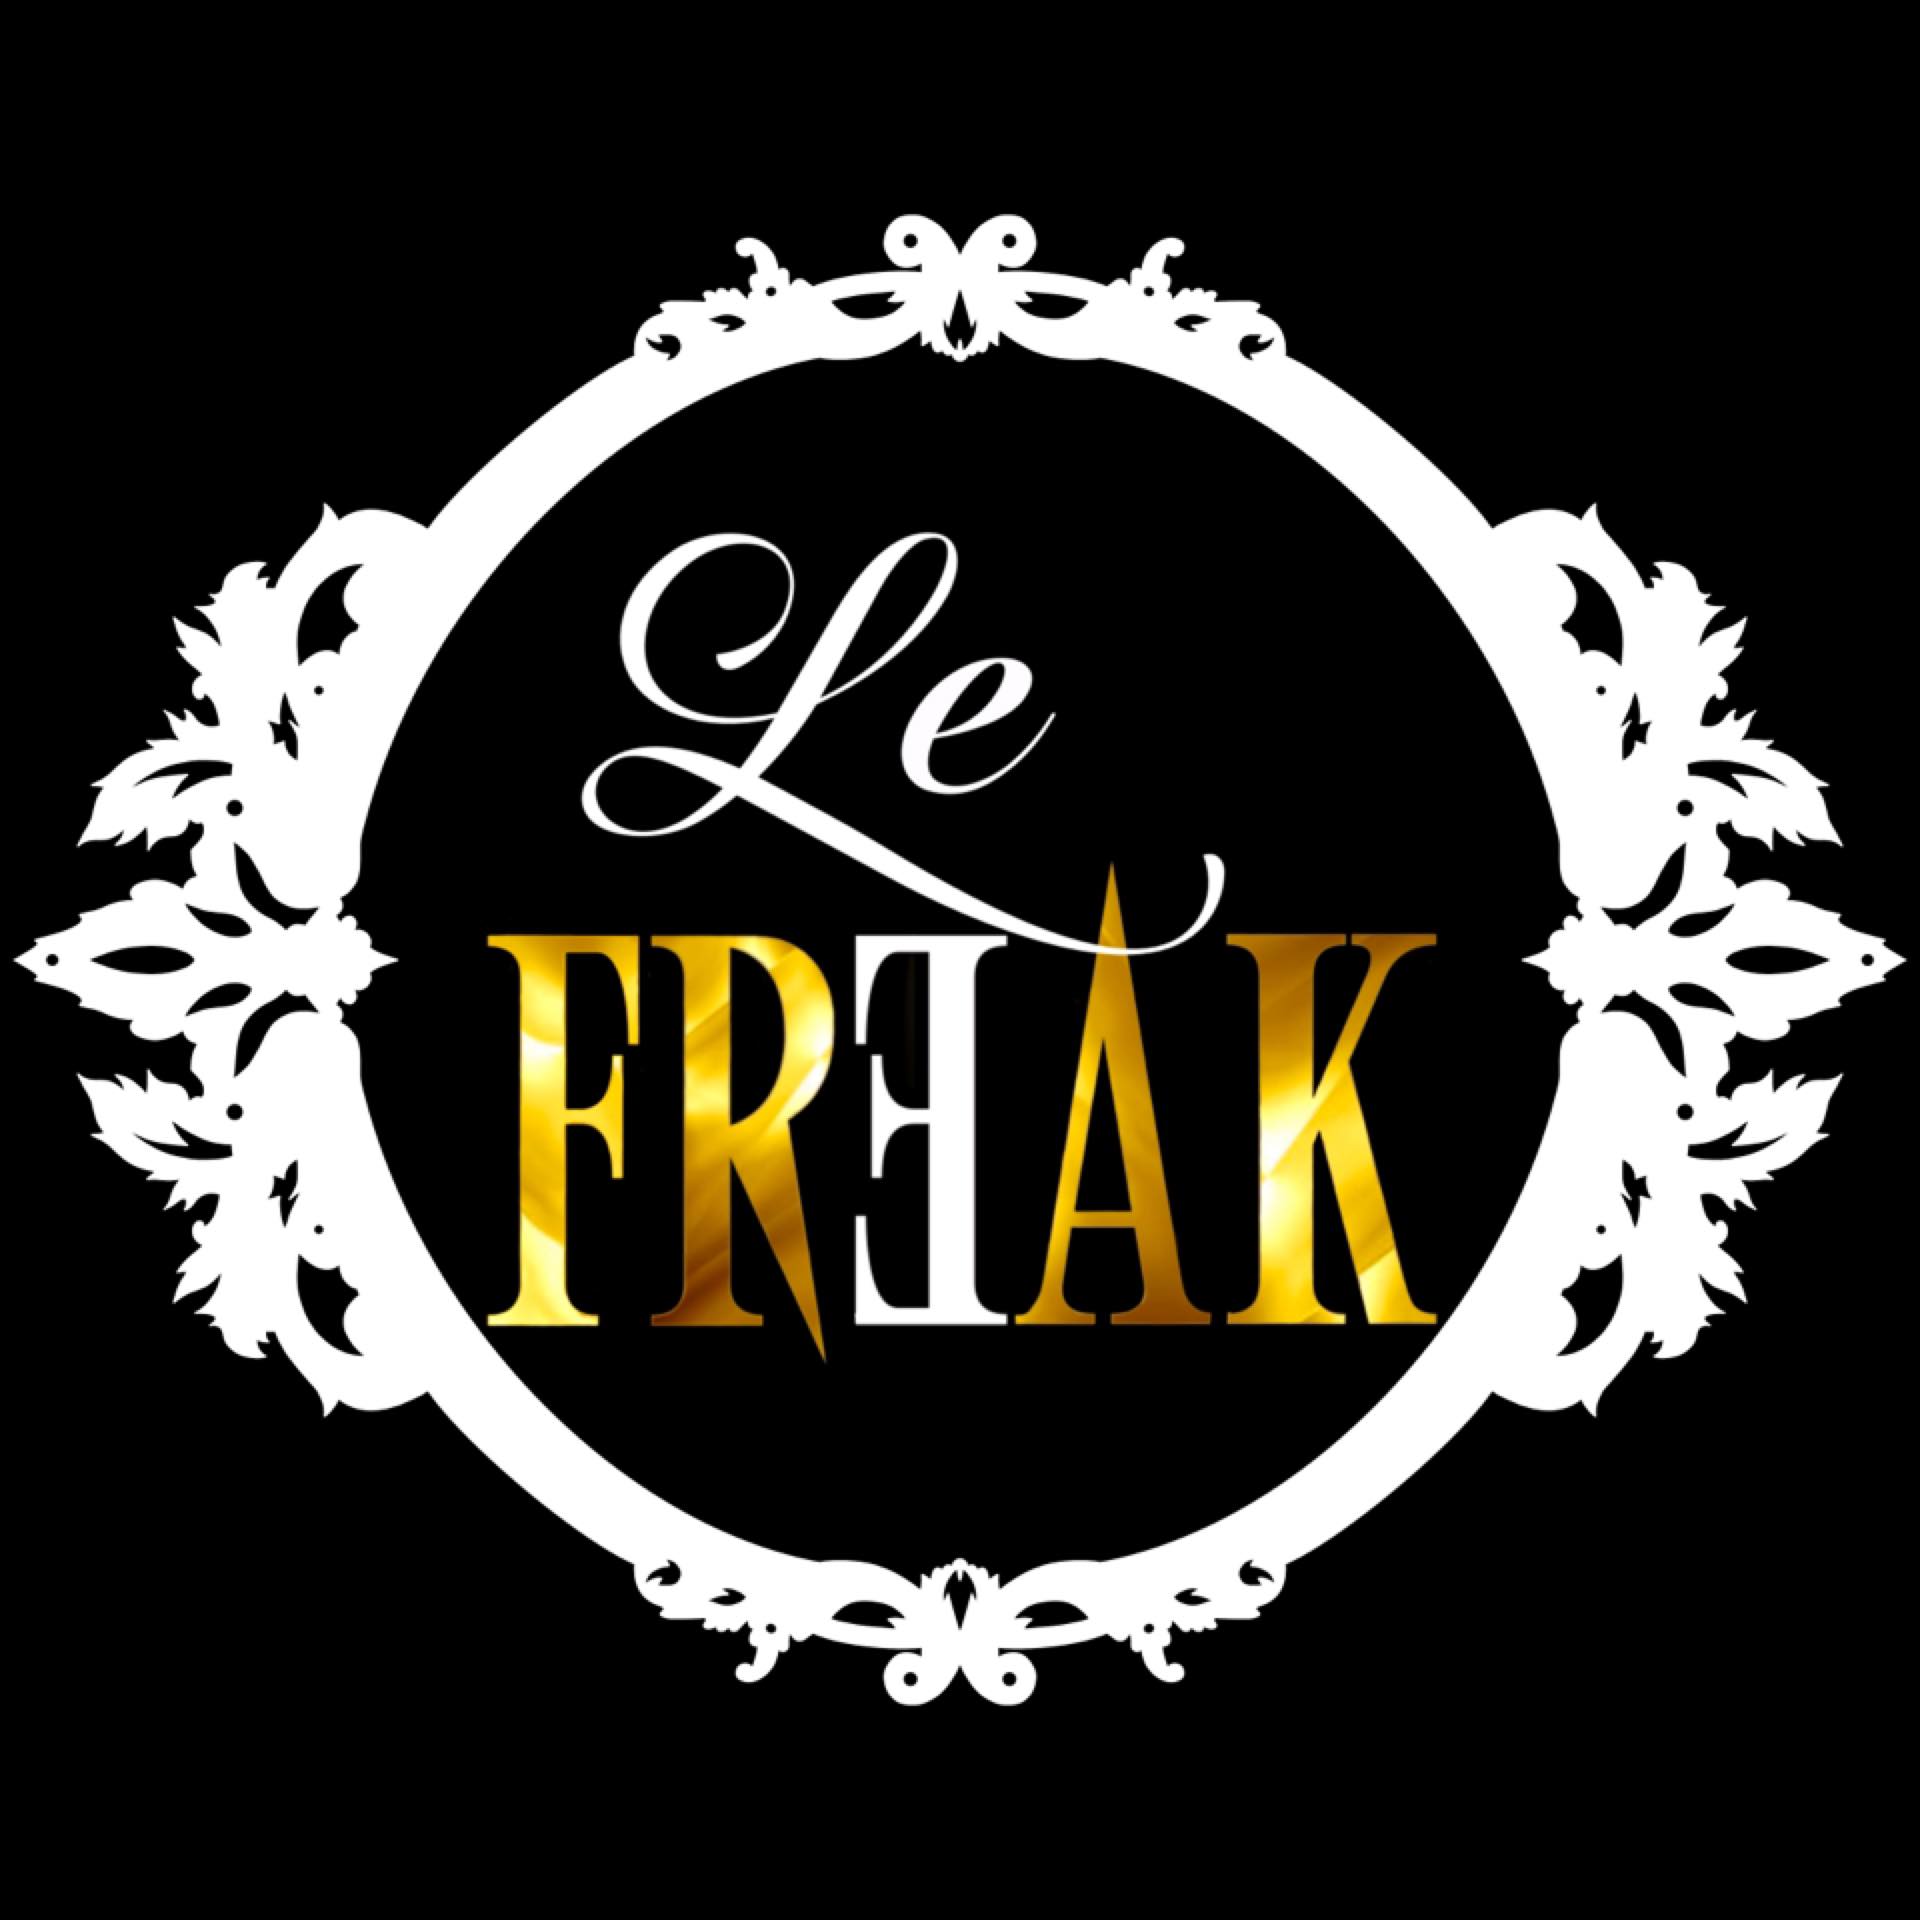 Freak (Le)